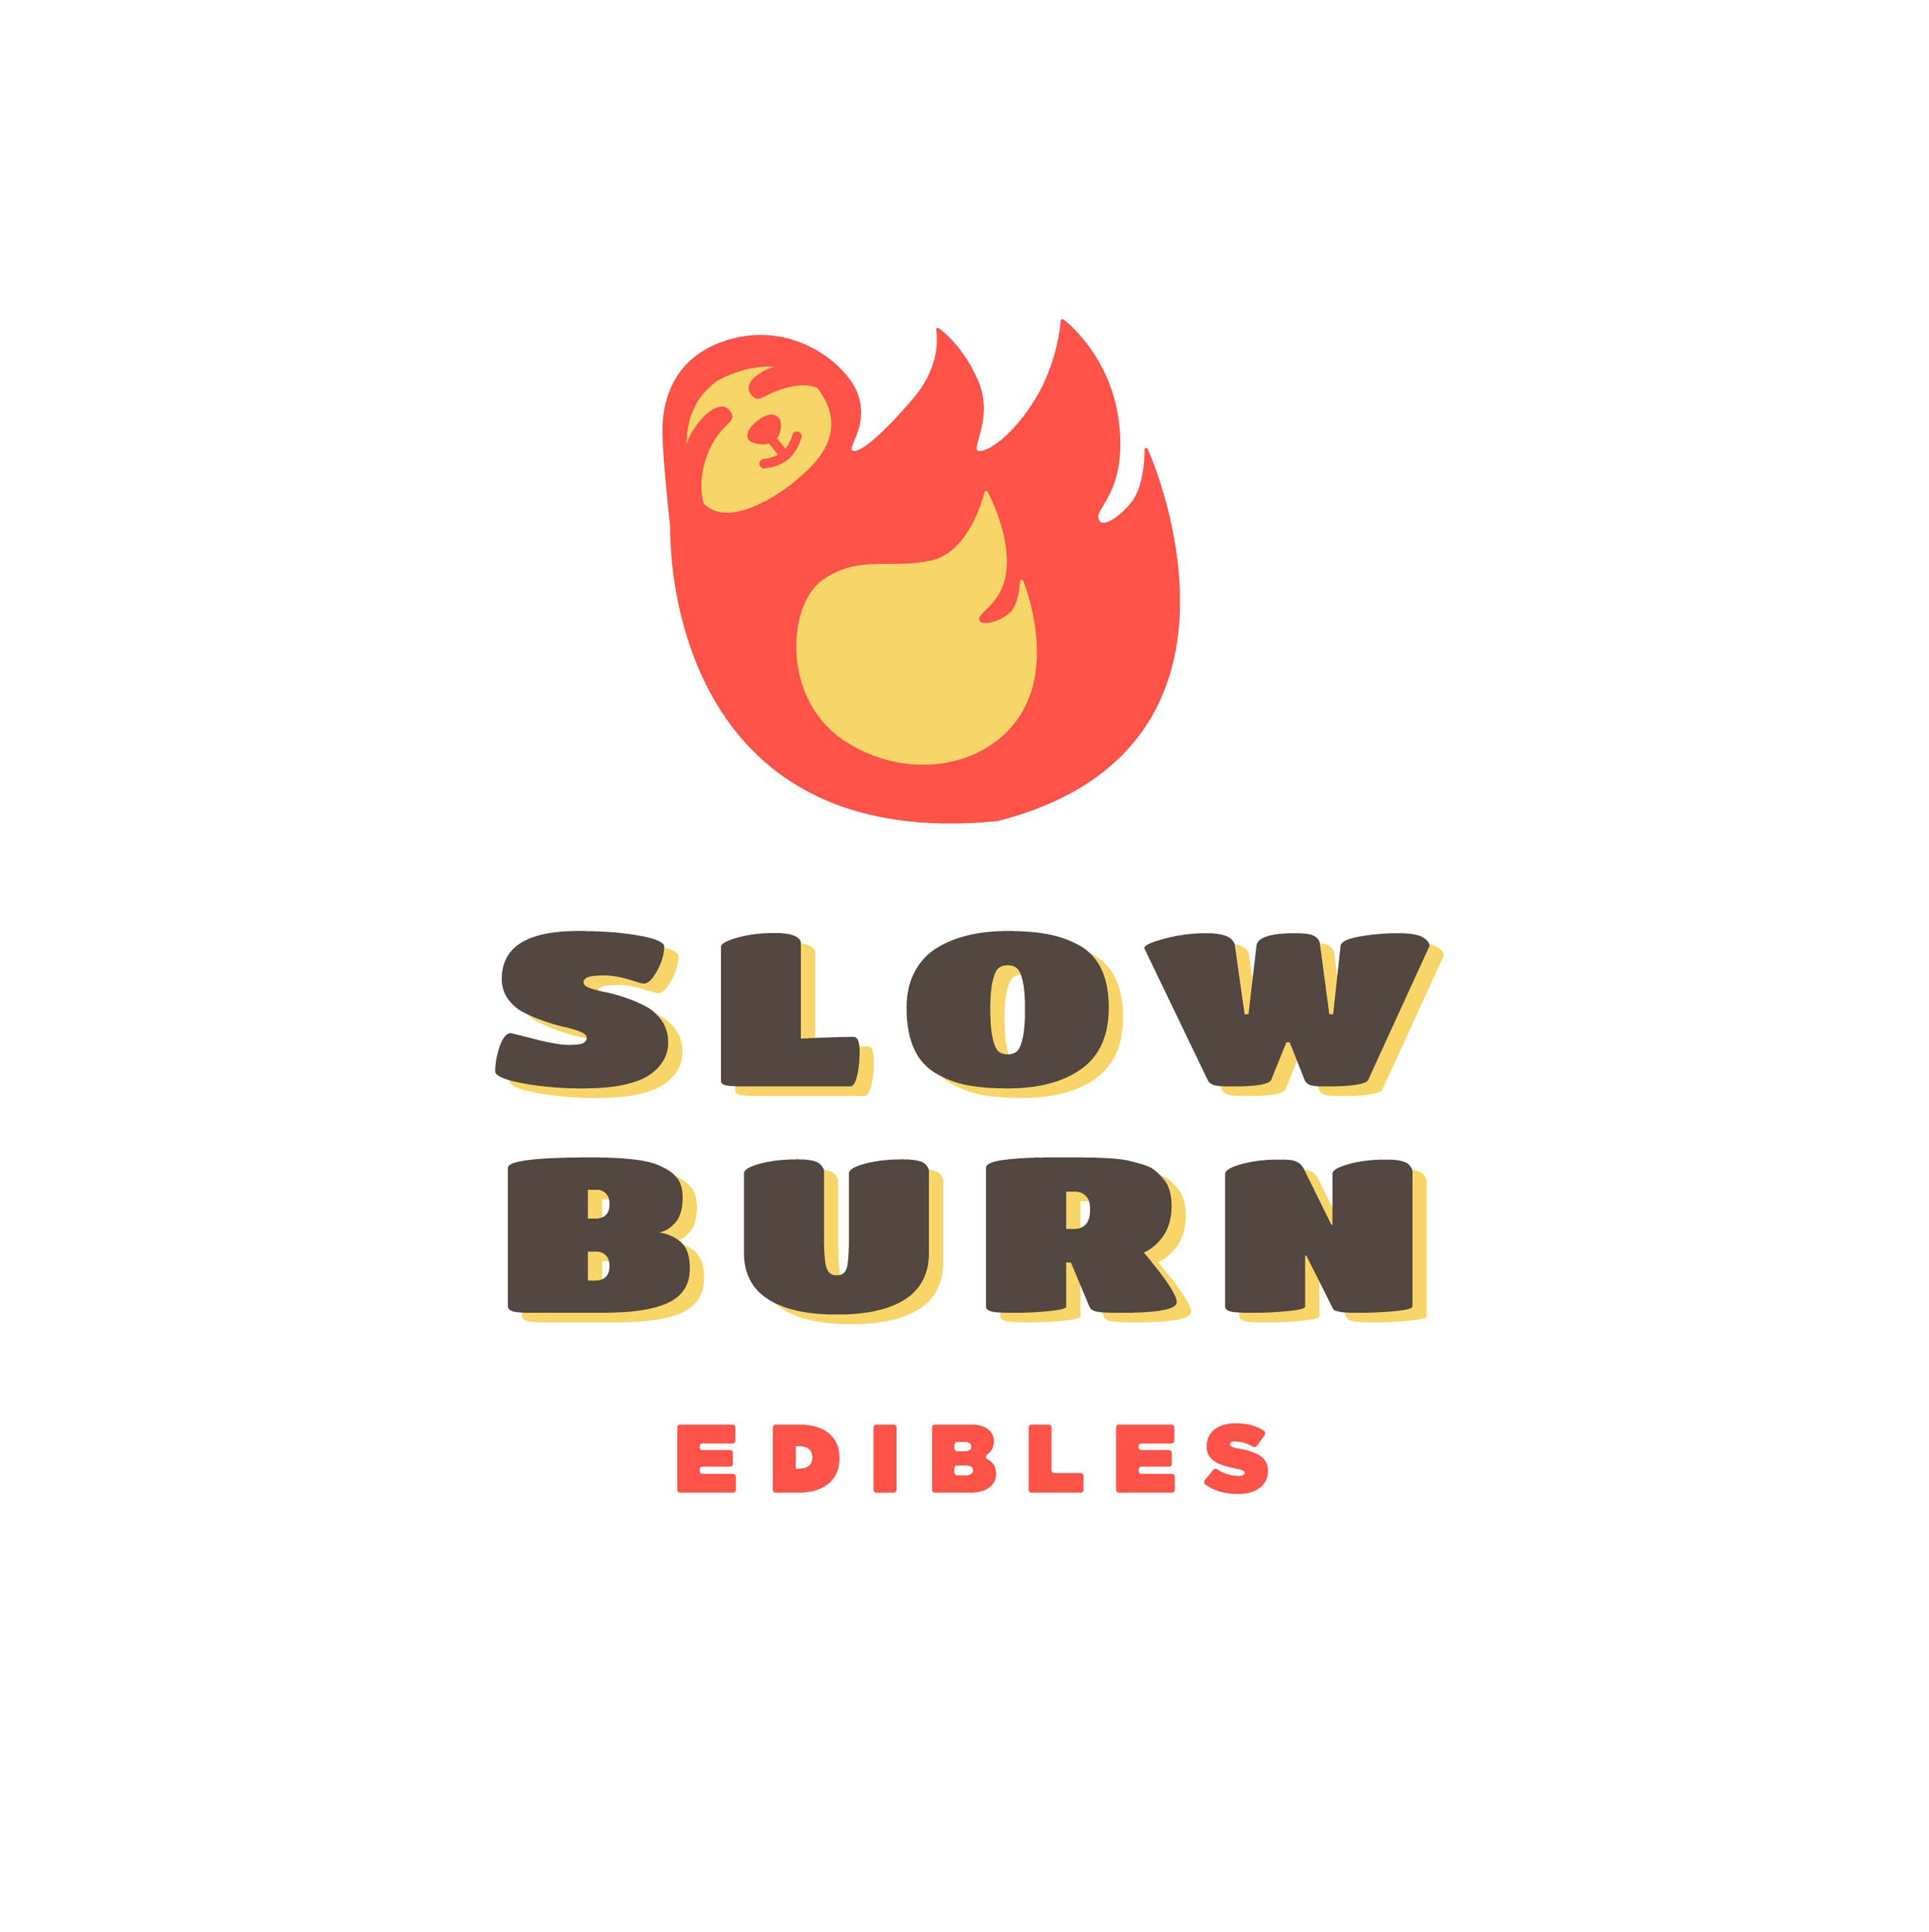 Slow Burn logo design by logo designer BFA COM DES for your inspiration and for the worlds largest logo competition